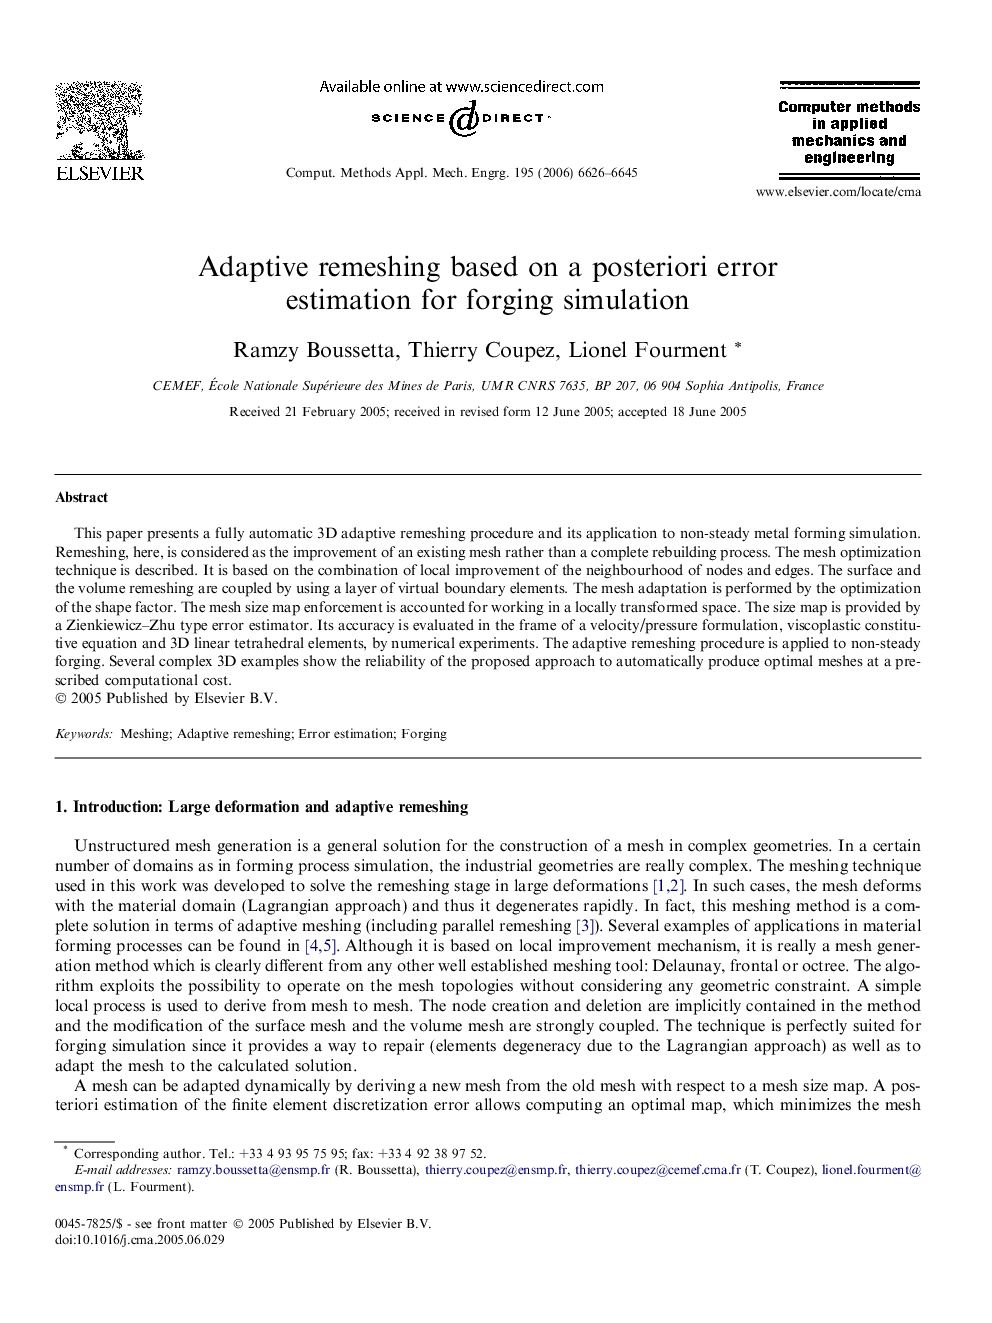 Adaptive remeshing based on a posteriori error estimation for forging simulation